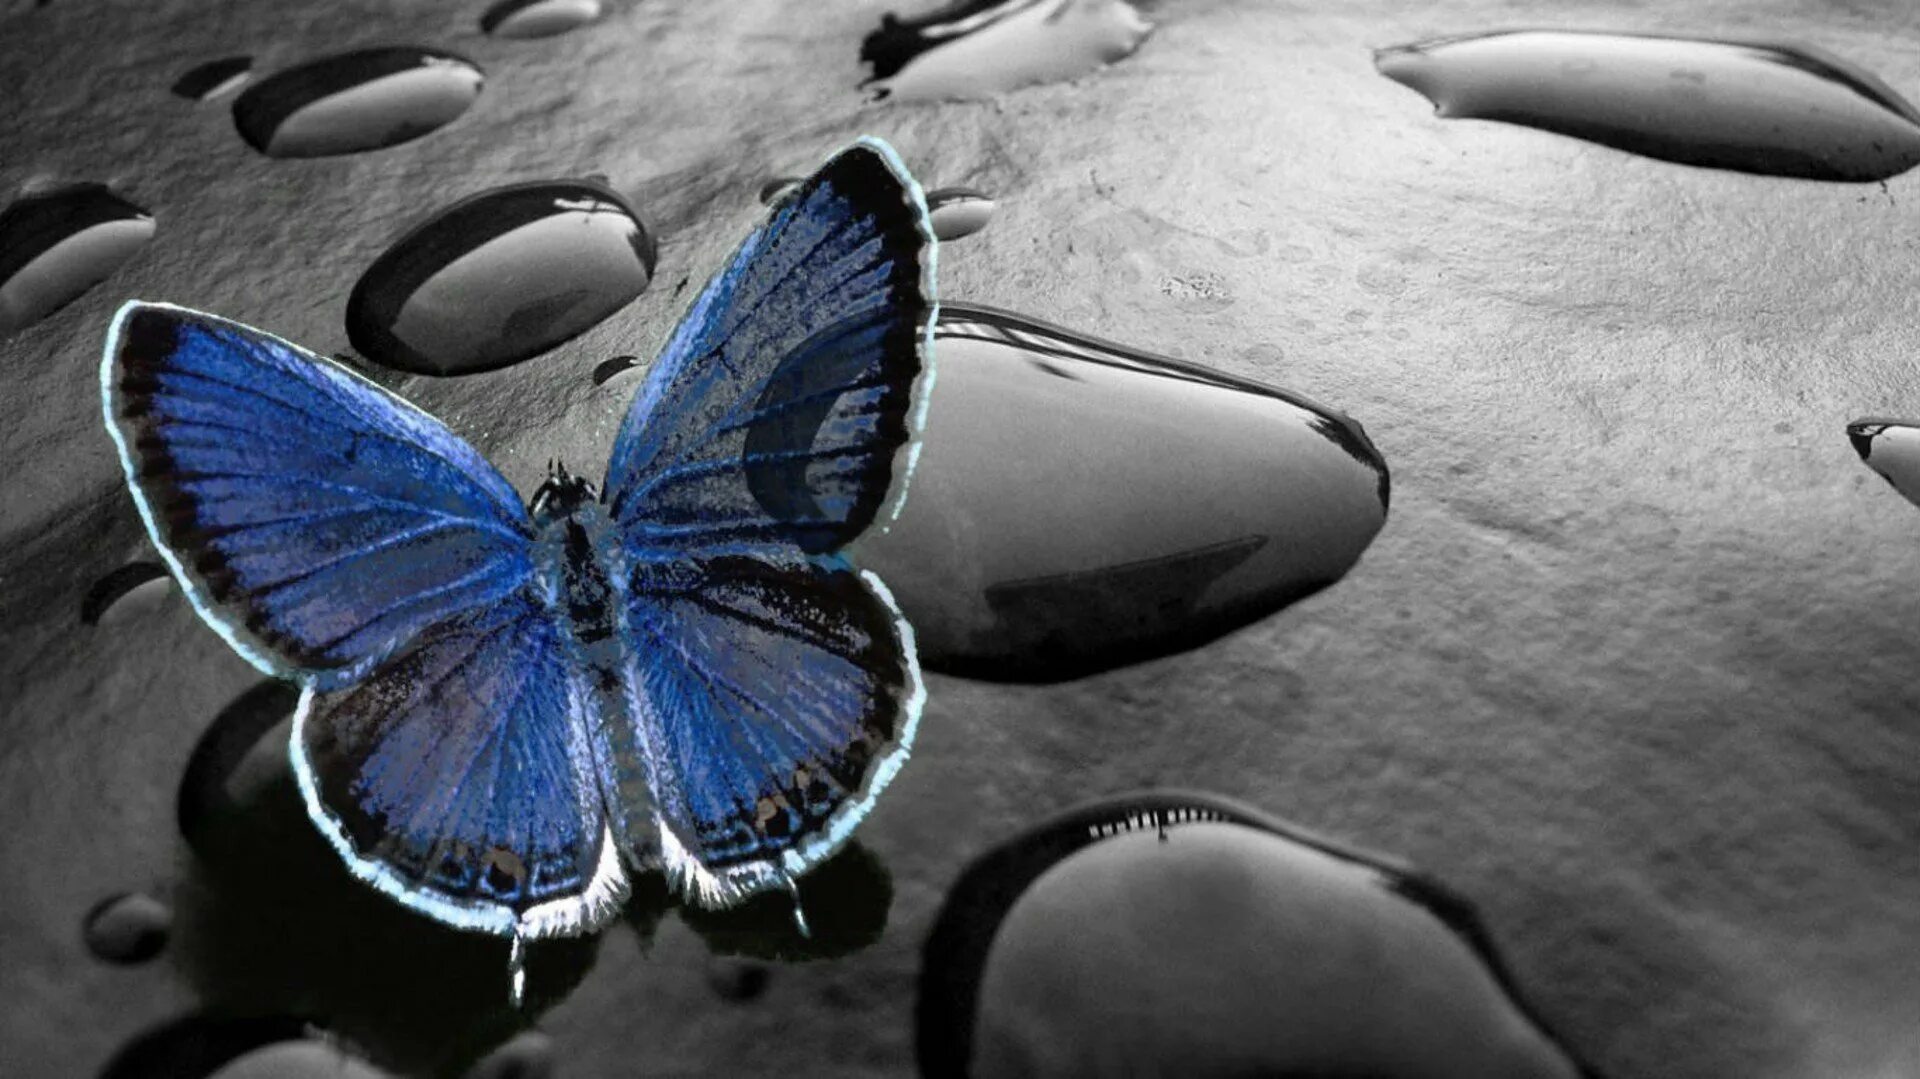 Картинки на рабочий стол бабочки. Заставка на телефон бабочки. Синяя бабочка. Необычные обои. Сменяющиеся обои на телефон